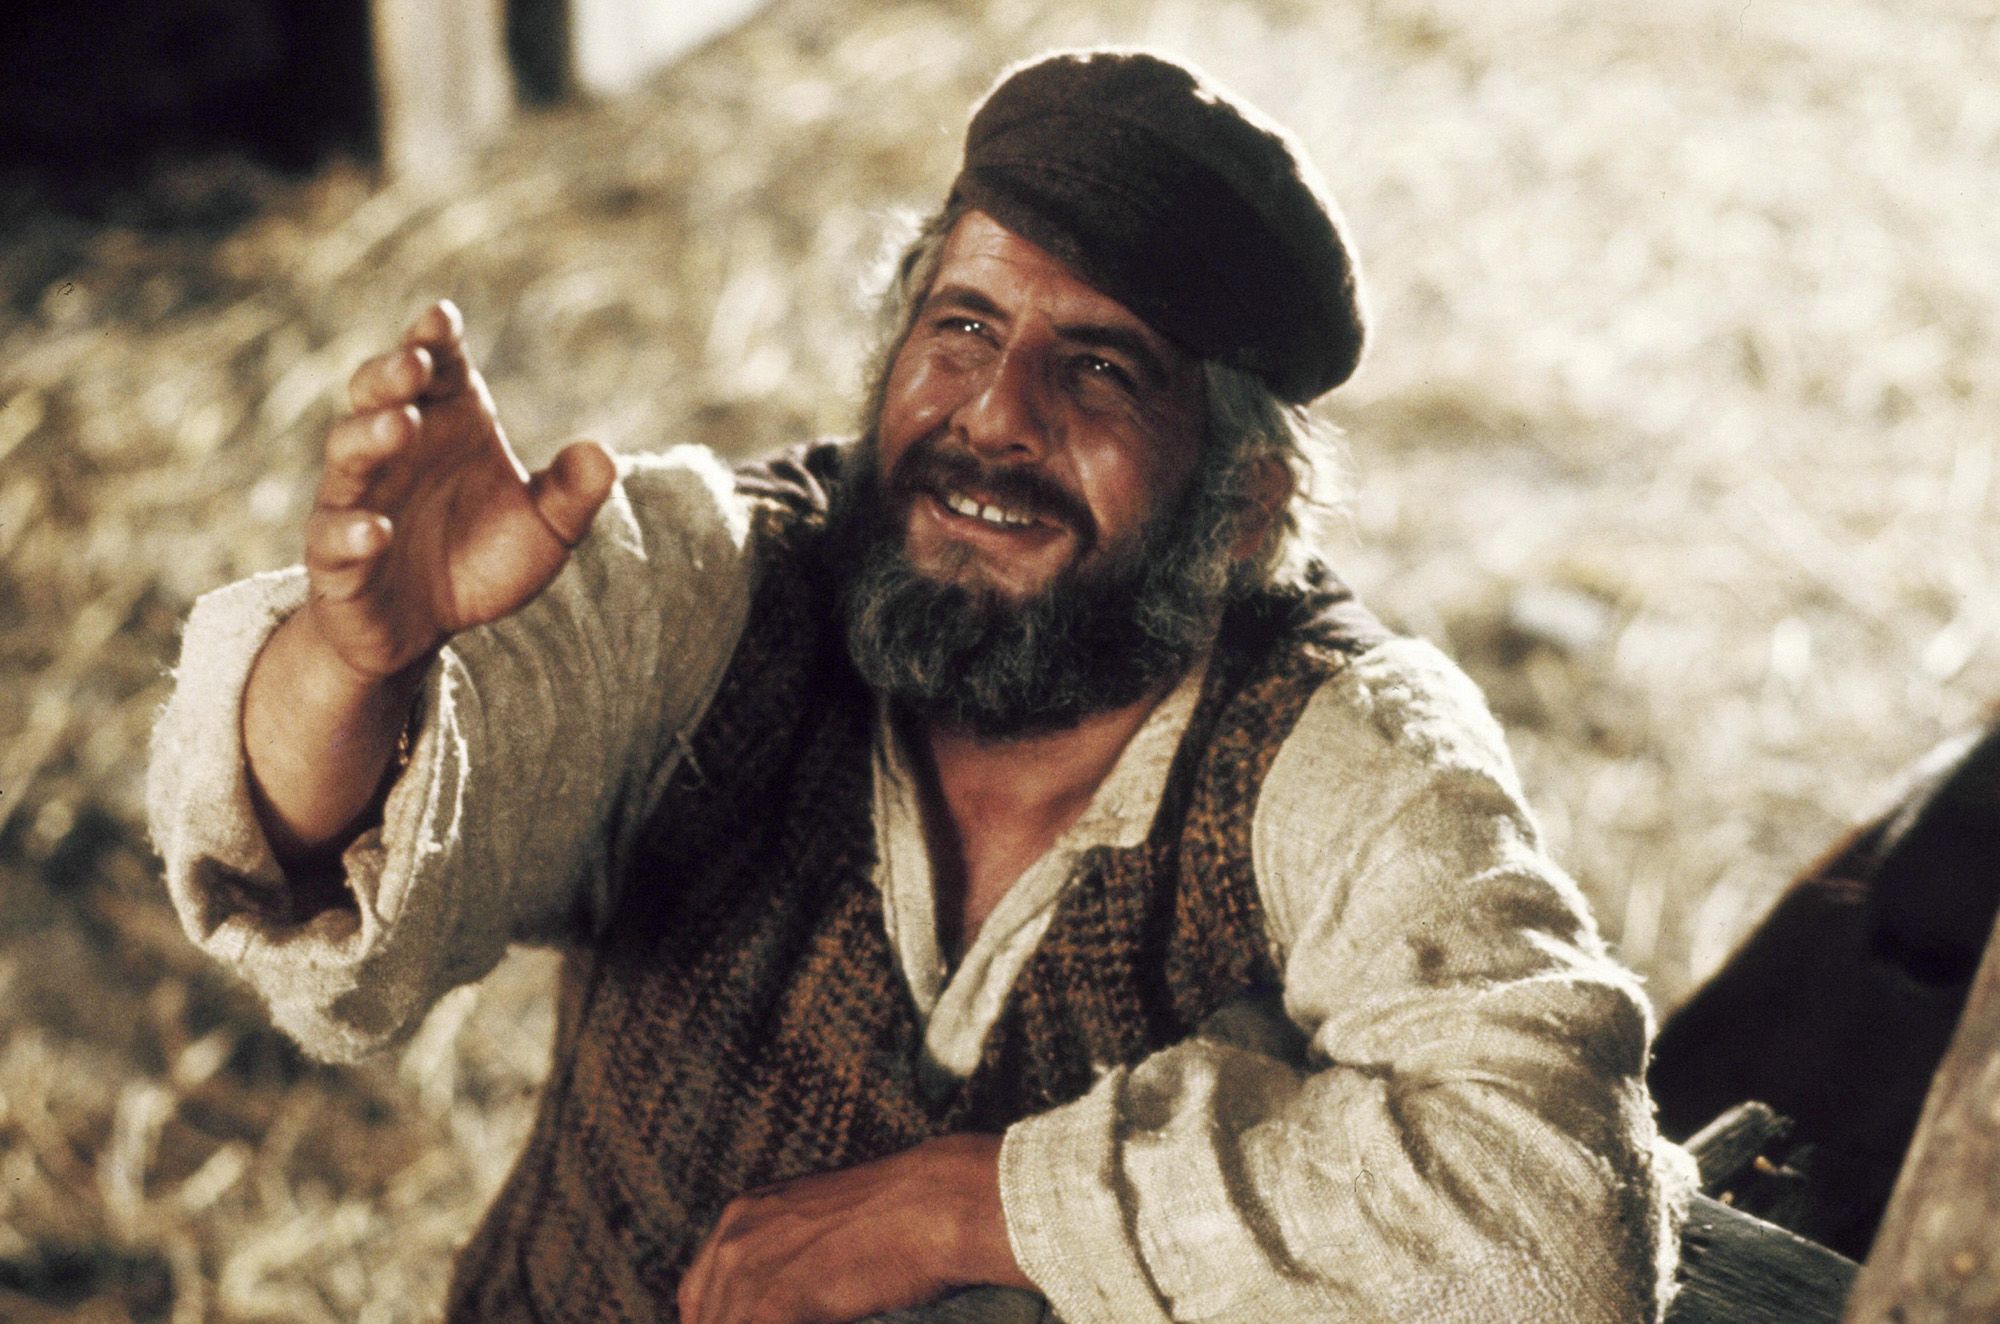 Chaim Topol, 'Fiddler on the Roof' actor, dies age 87 | CNN